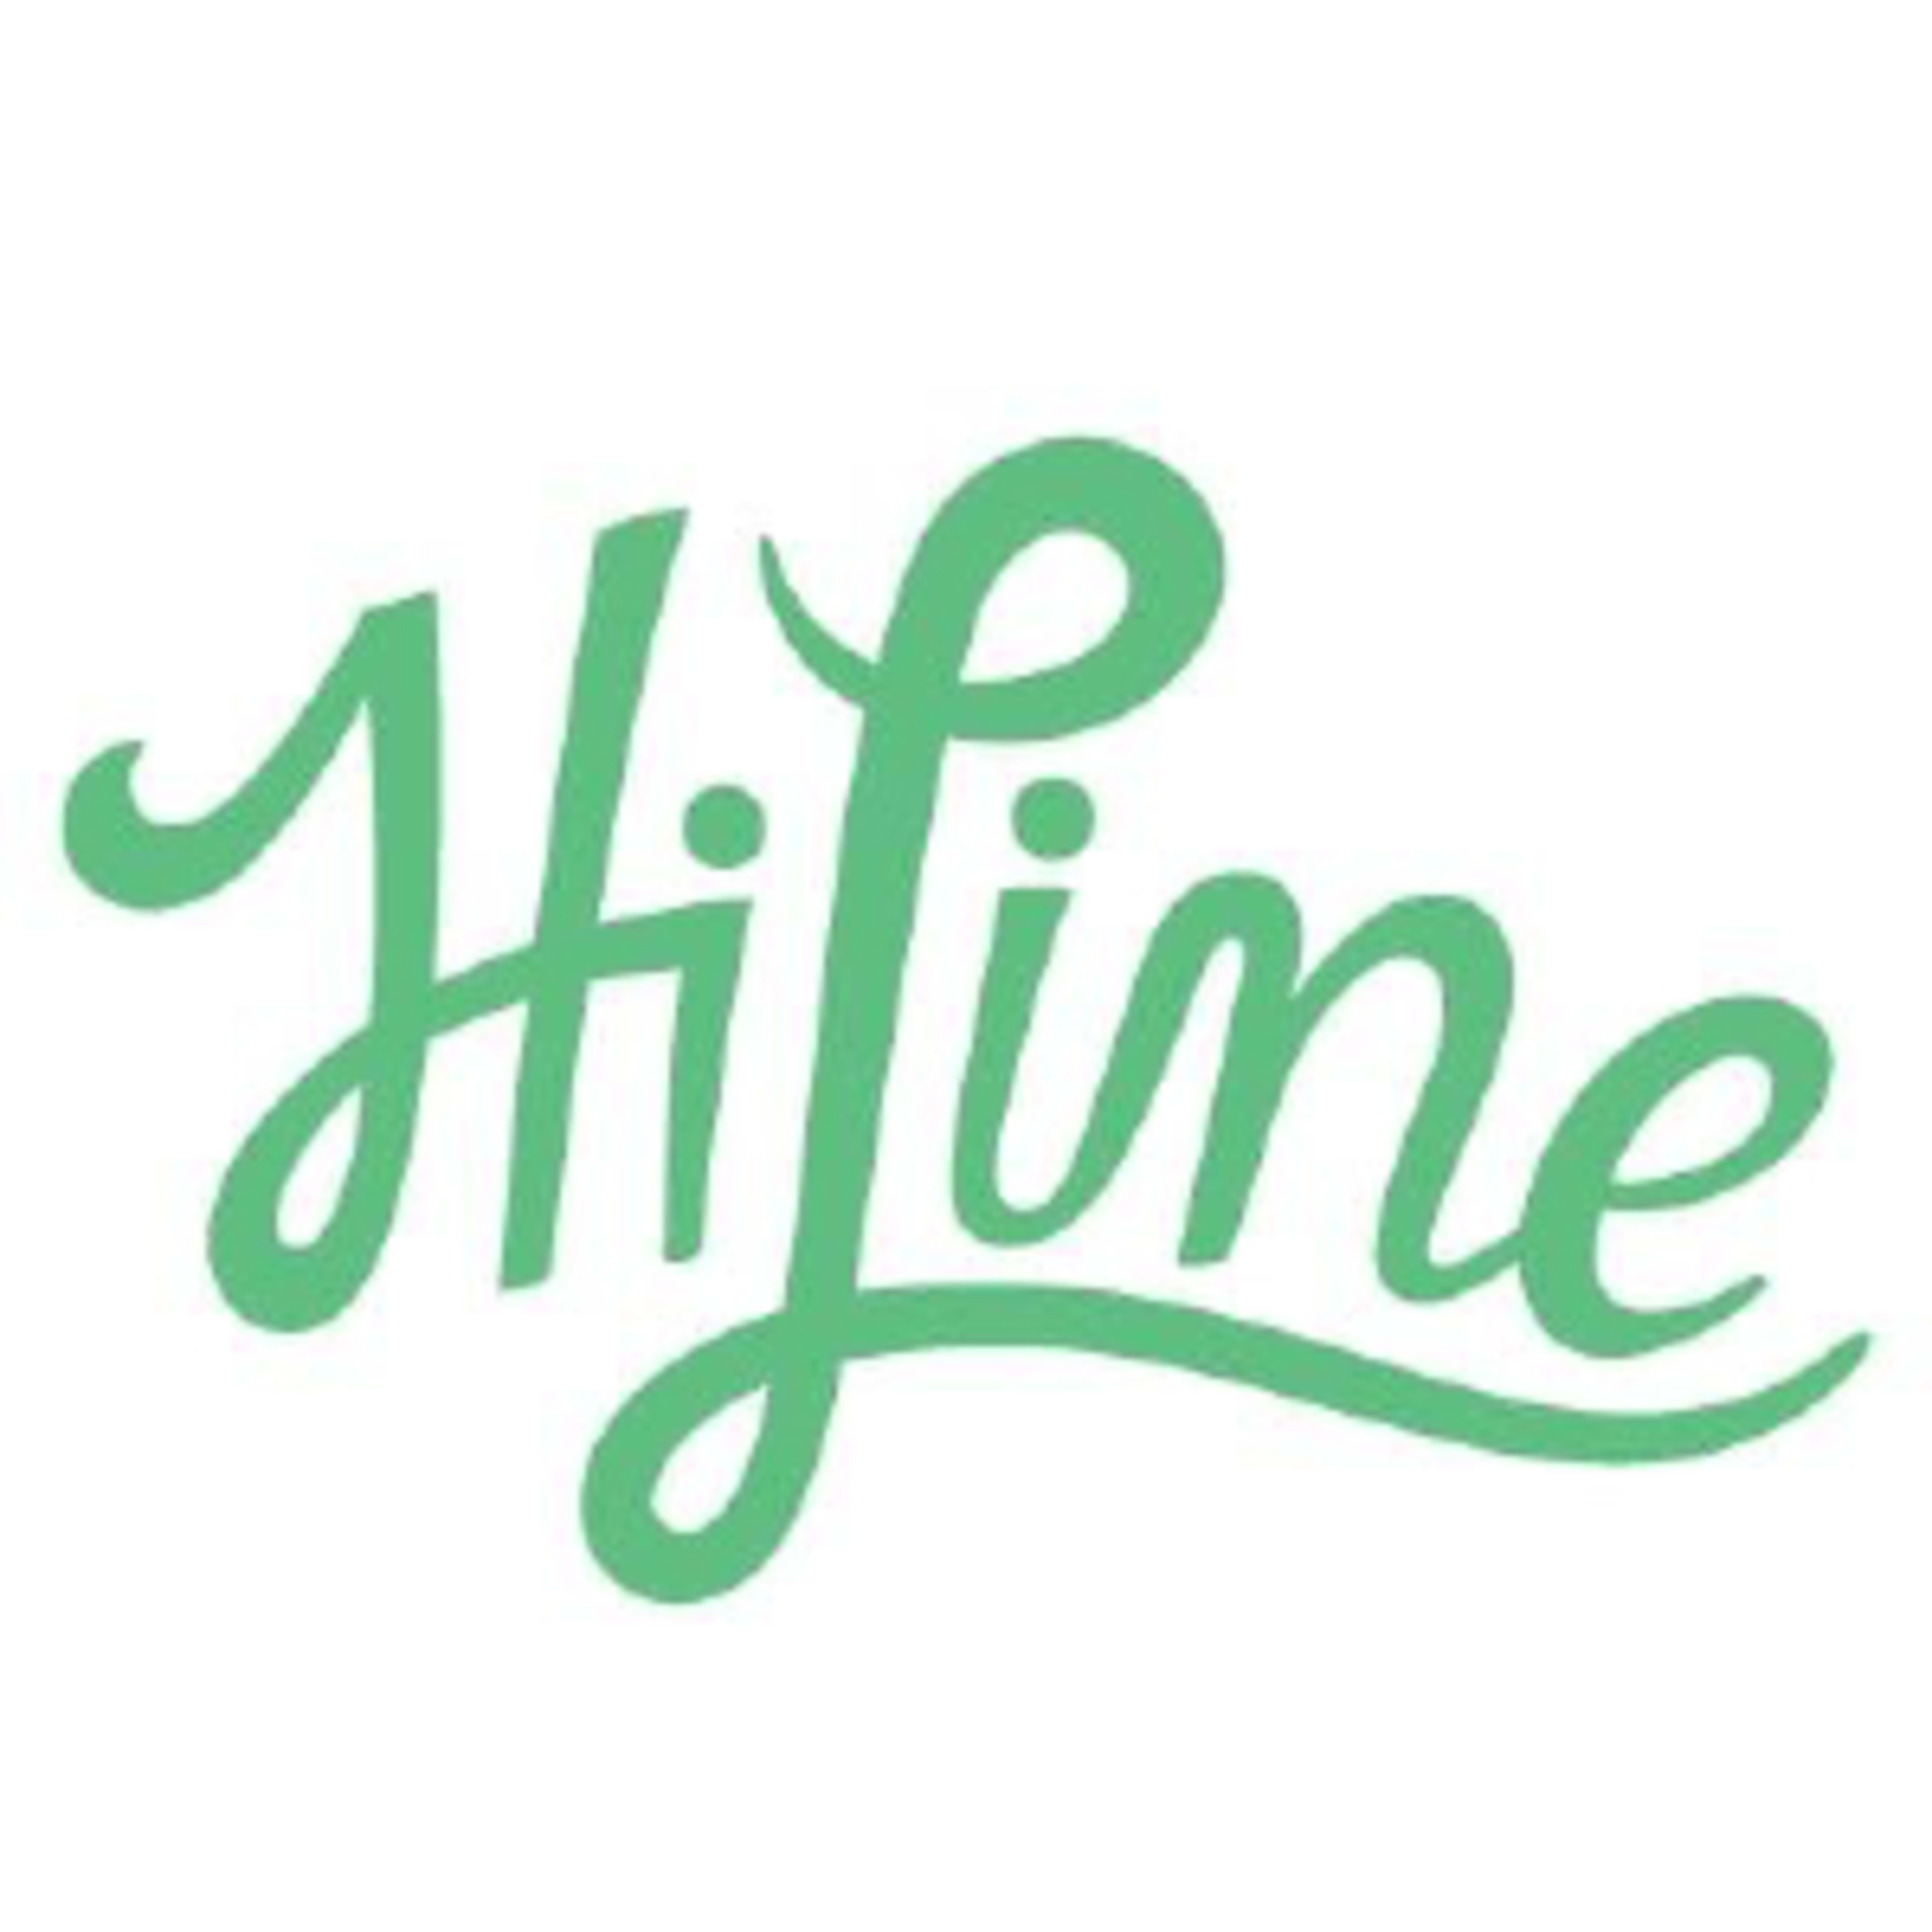 HiLine CoffeeCode